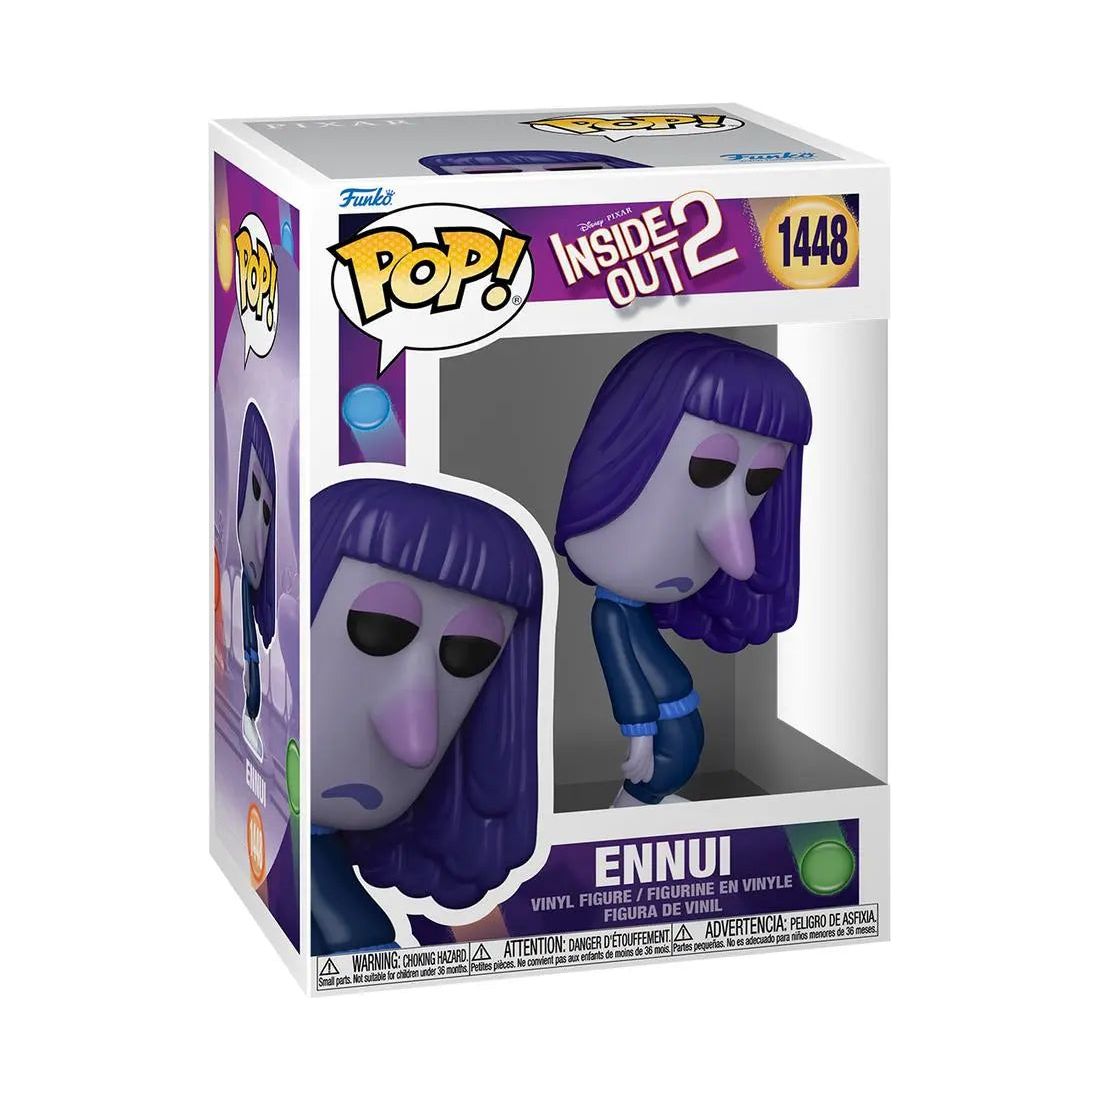 Funko Pop! Disney Pixar Inside Out 2 1448 Ennui Funko